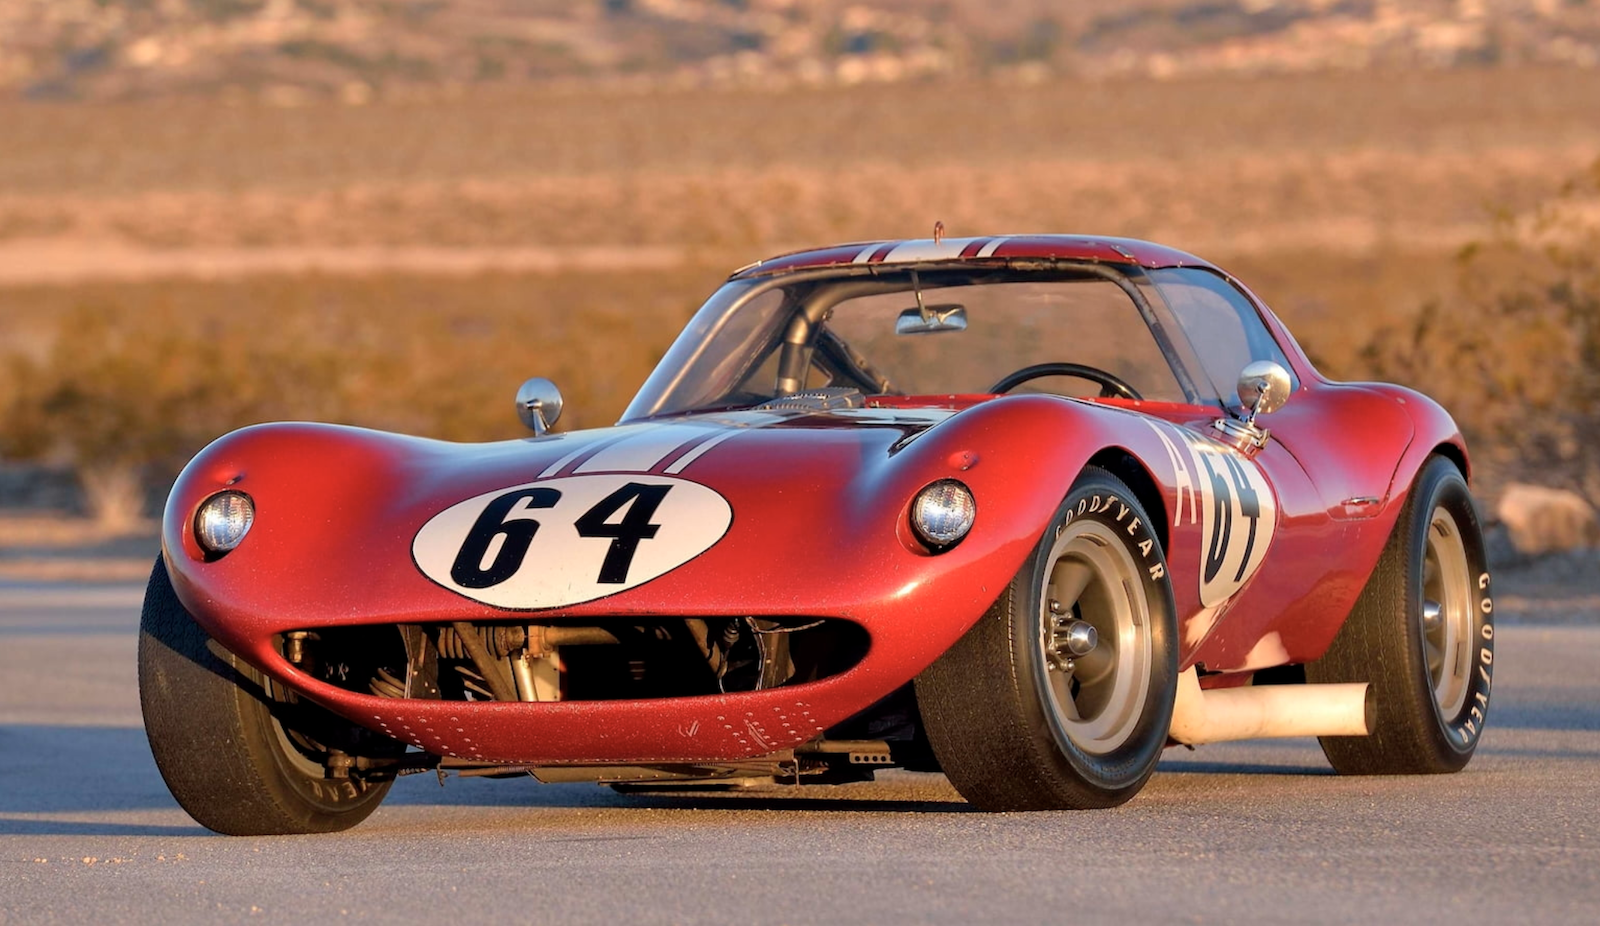 Car Of The Day - 1963 Cheetah Race Car